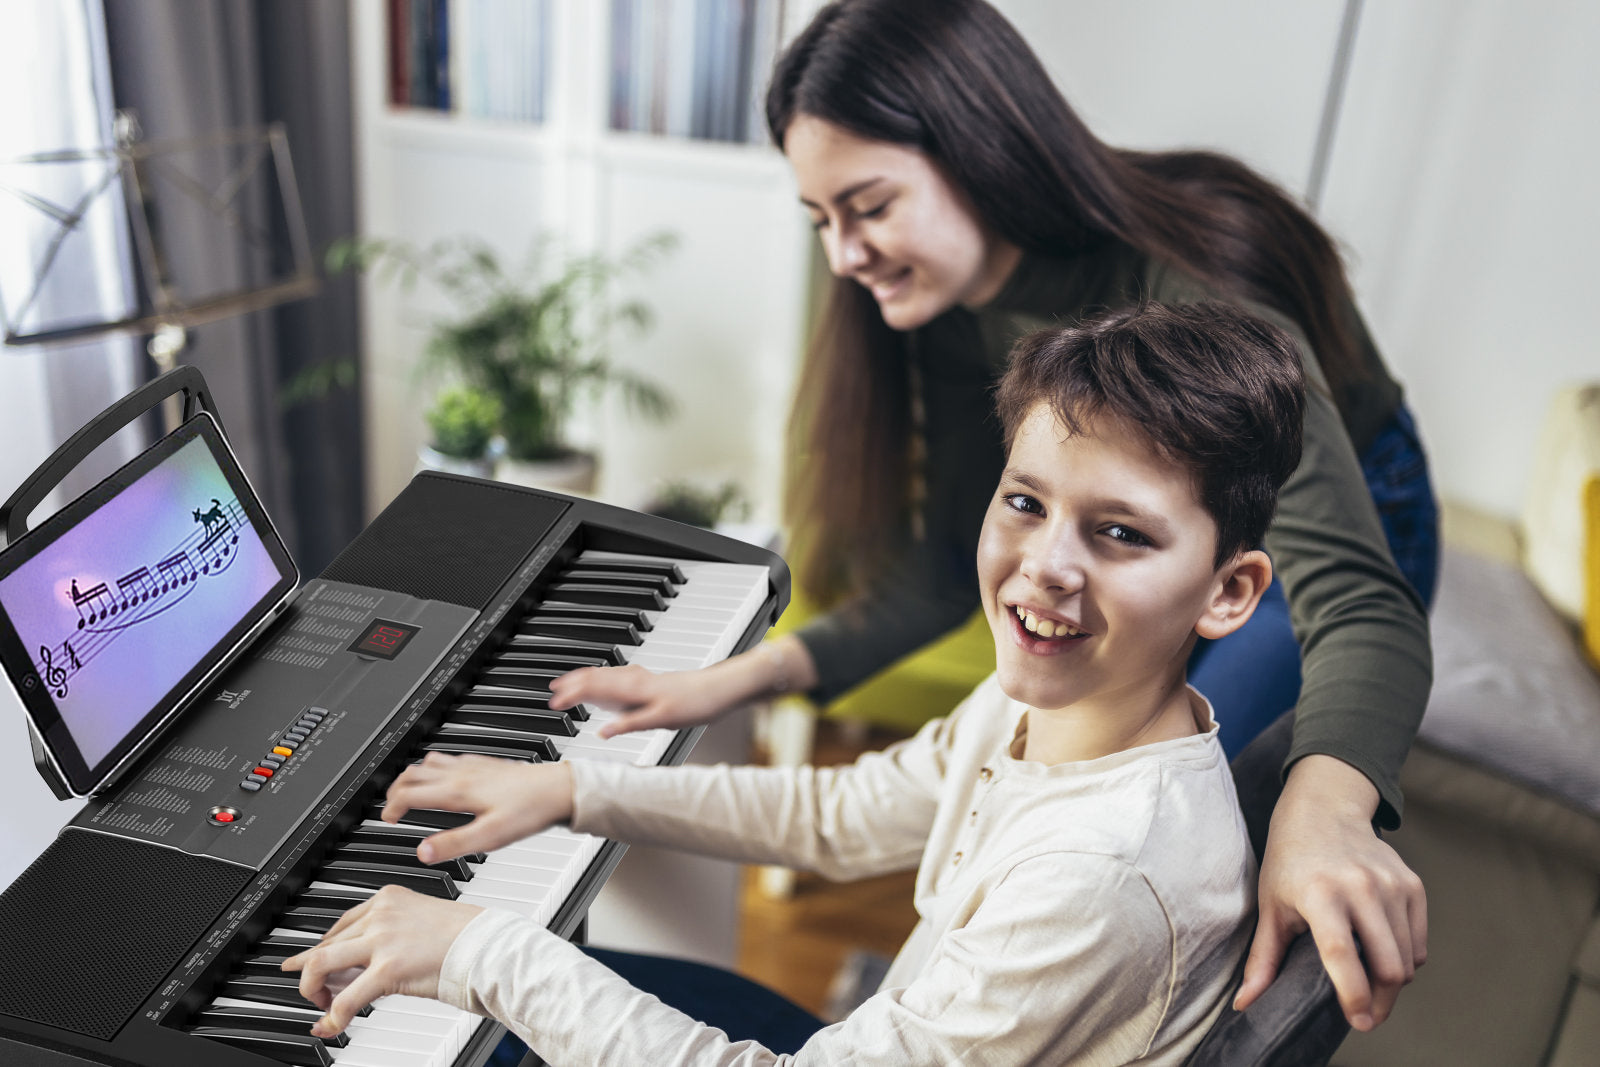 MUSTAR MEK-600, Piano Keyboard, 61 Key Touch Sensitive Keyboard, Electric  Piano for Beginners